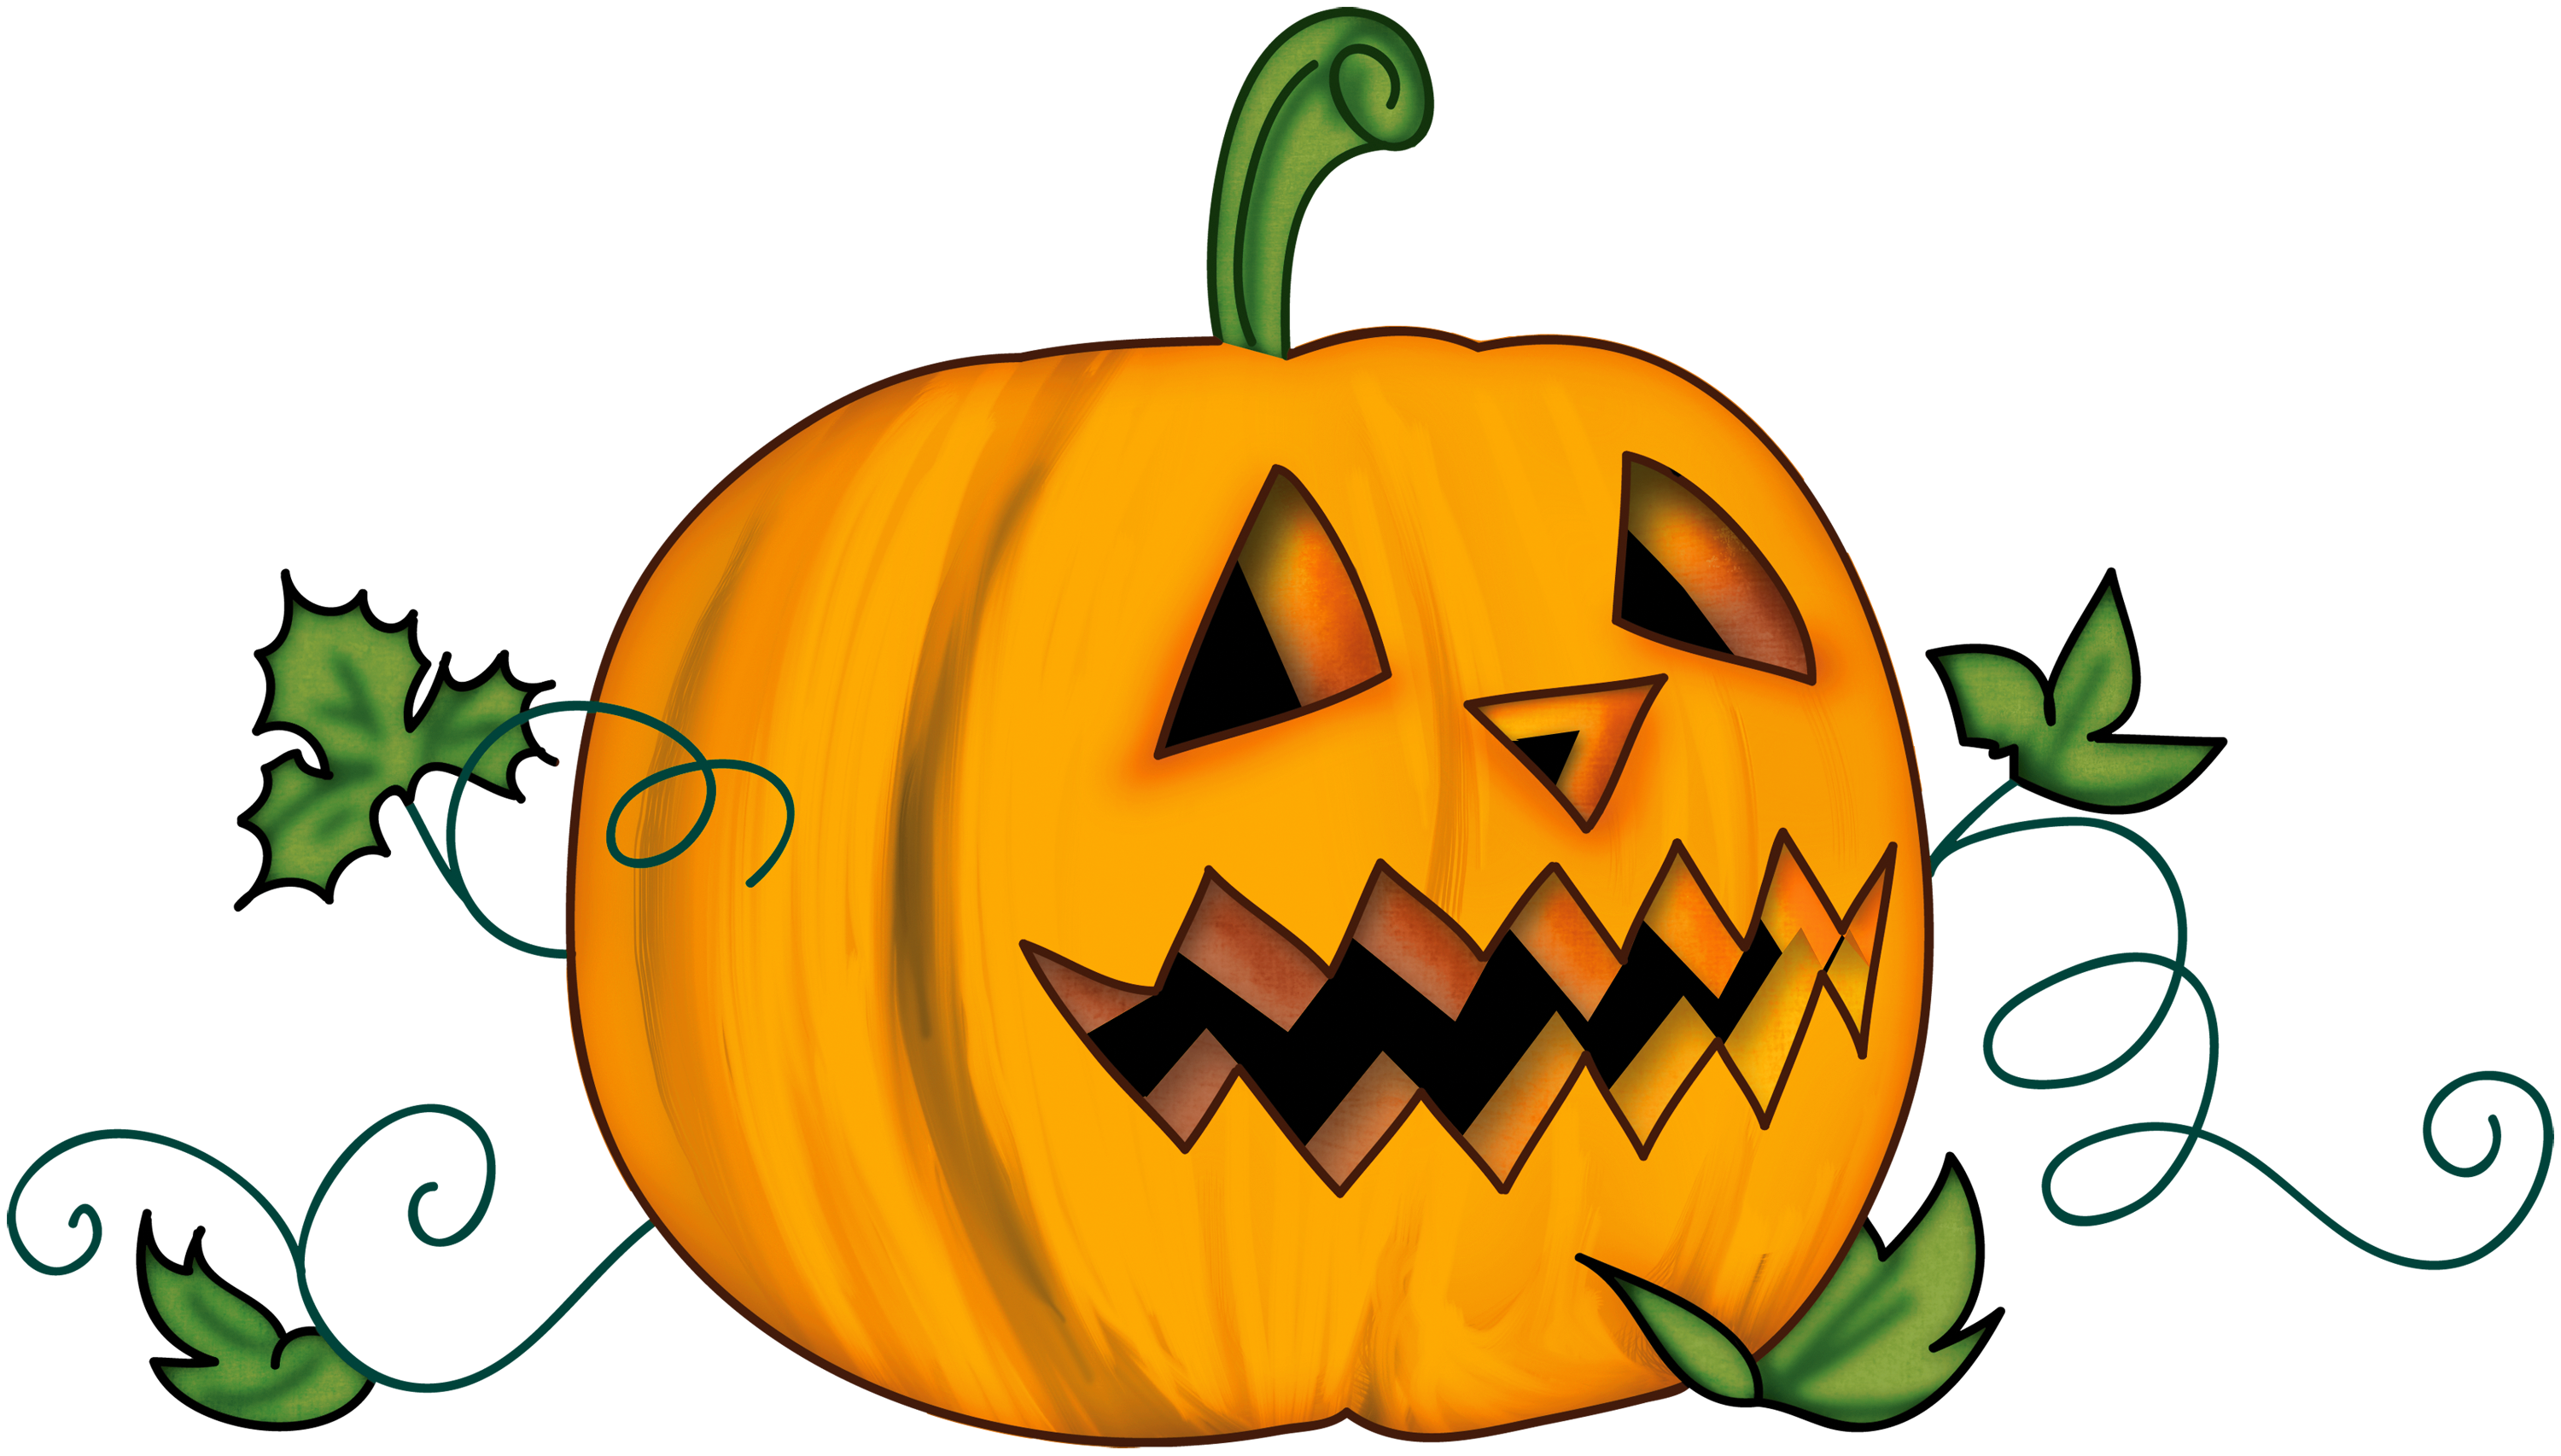 Clip art of a pumpkin